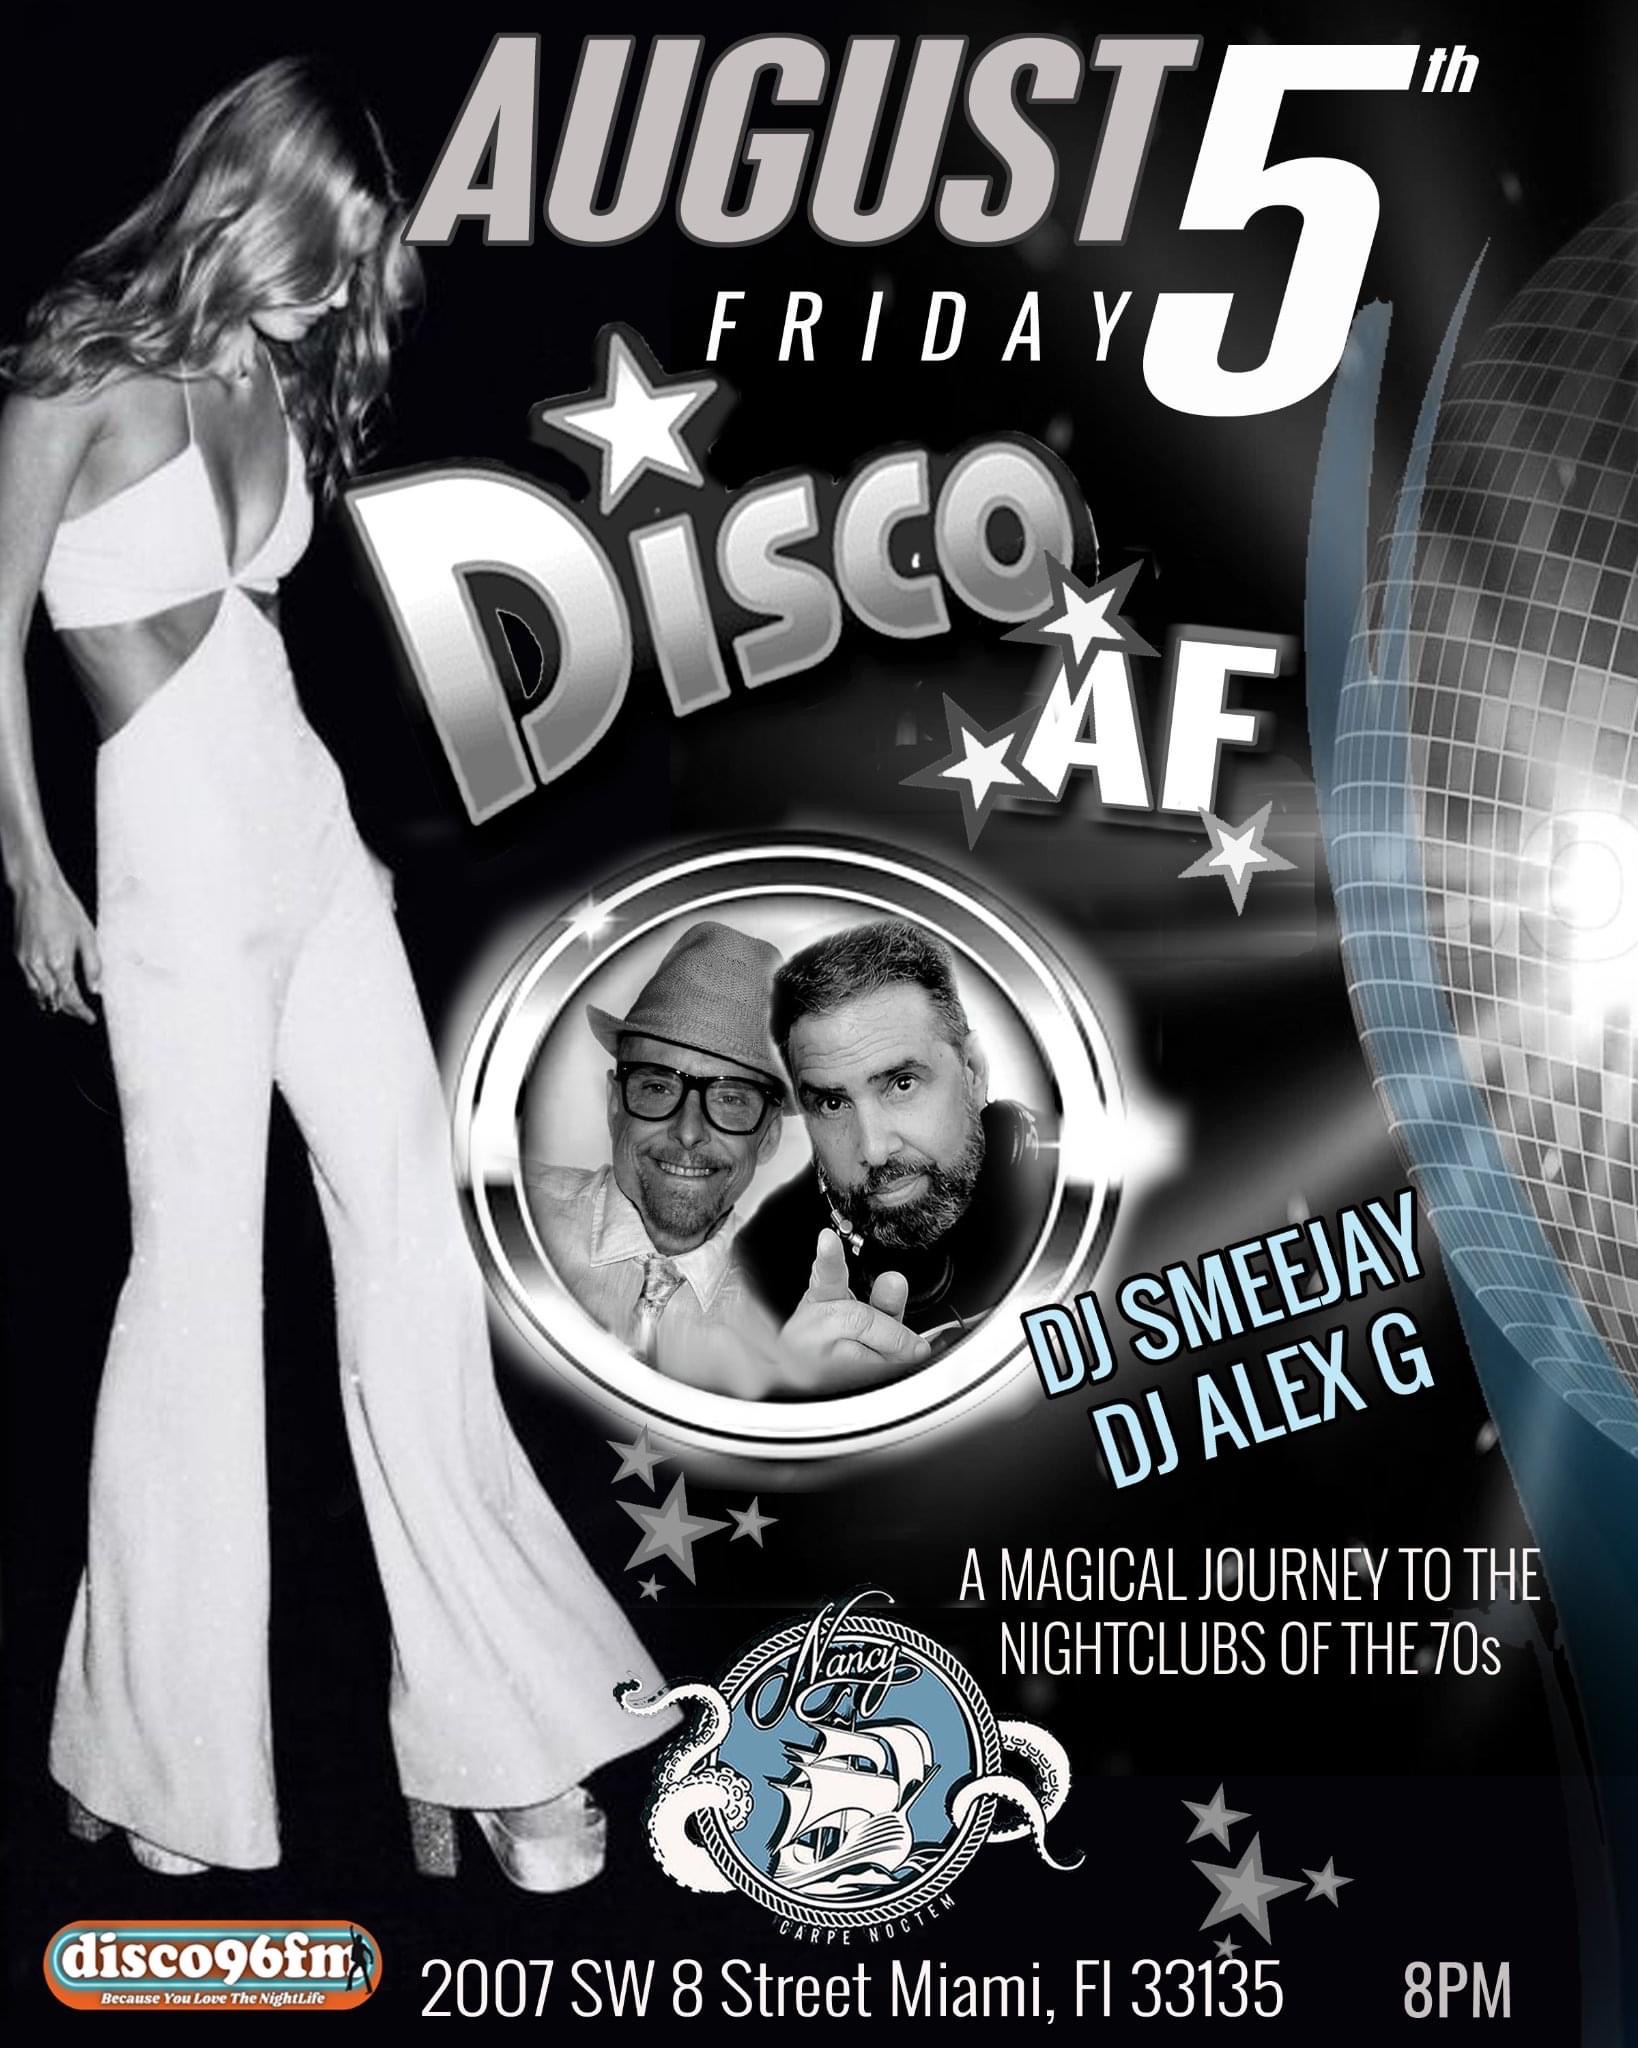 Disco AF at Bar Nancy - August 5th at 8PM - DJ SMEEJAY and DJ ALEX G